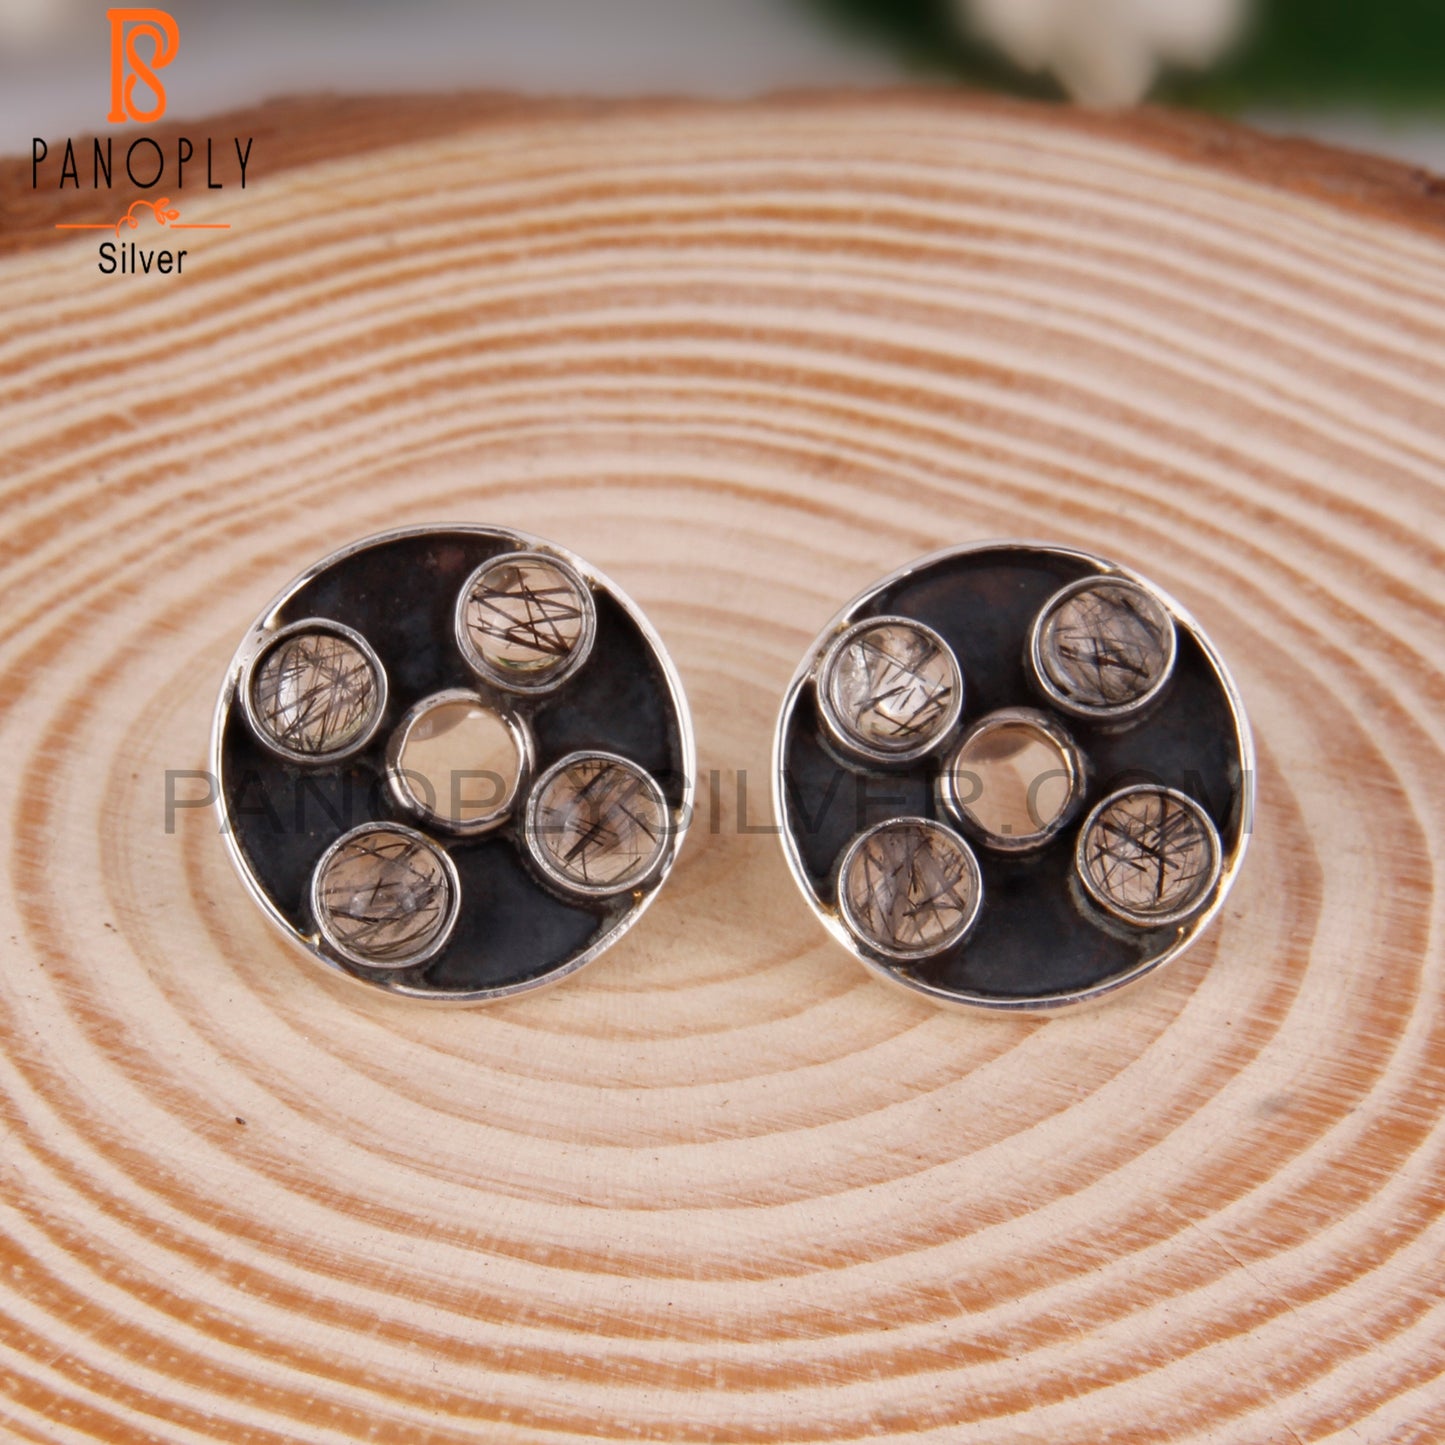 Stylish Designer Black Rutile Round Sterling Silver Earrings